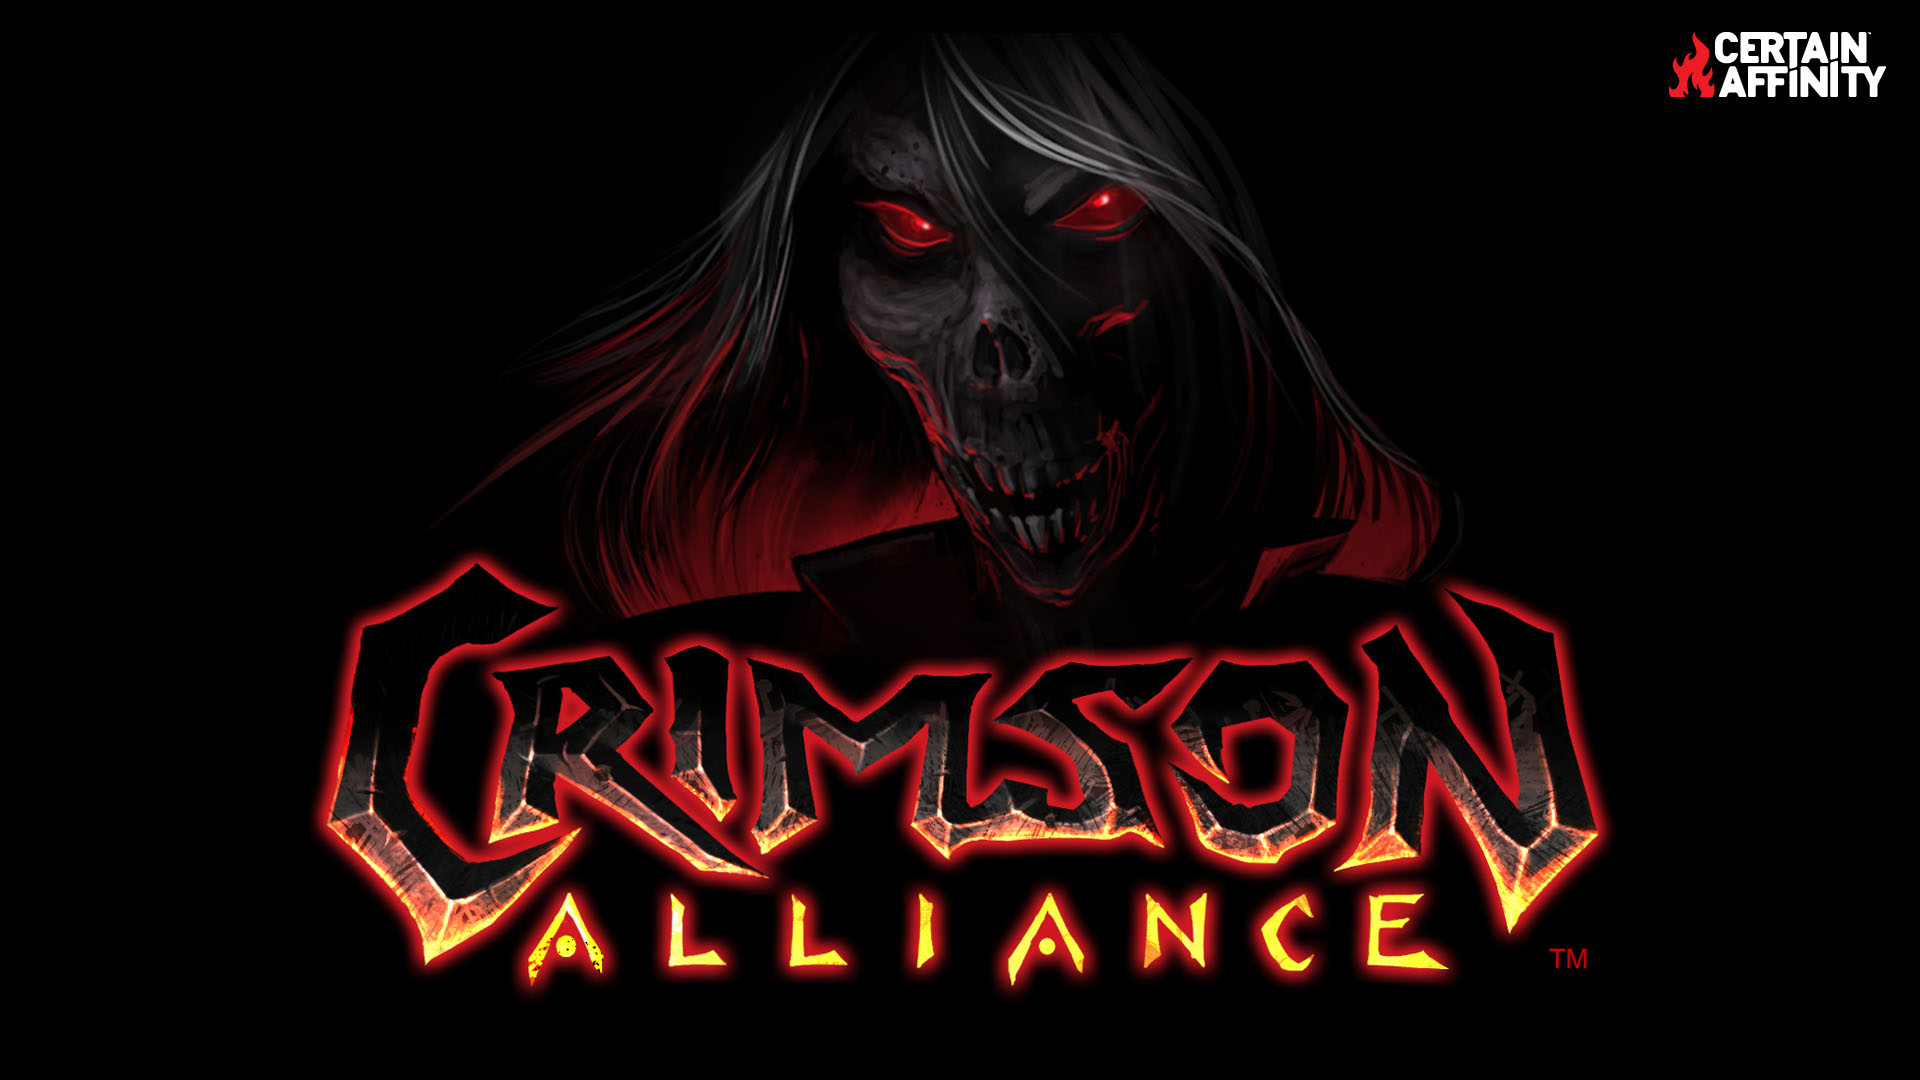 Crimson Alliance Xbox Live Wallpaper Fonds D Cran Image